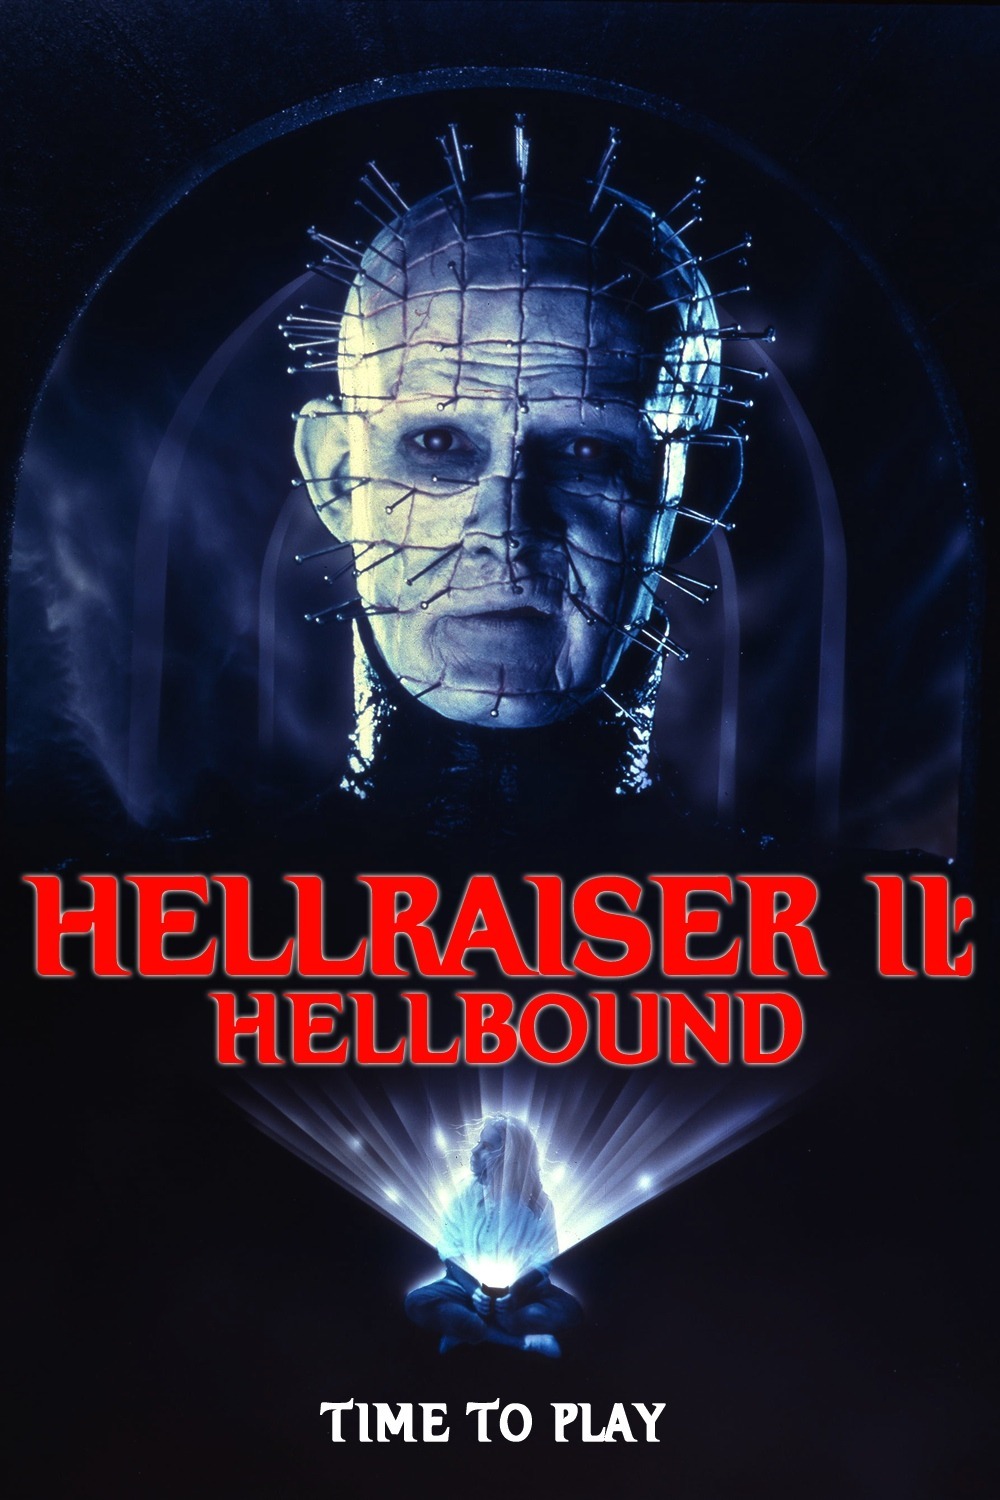 Tremble Ep 170: Hellbound: Hellraiser II